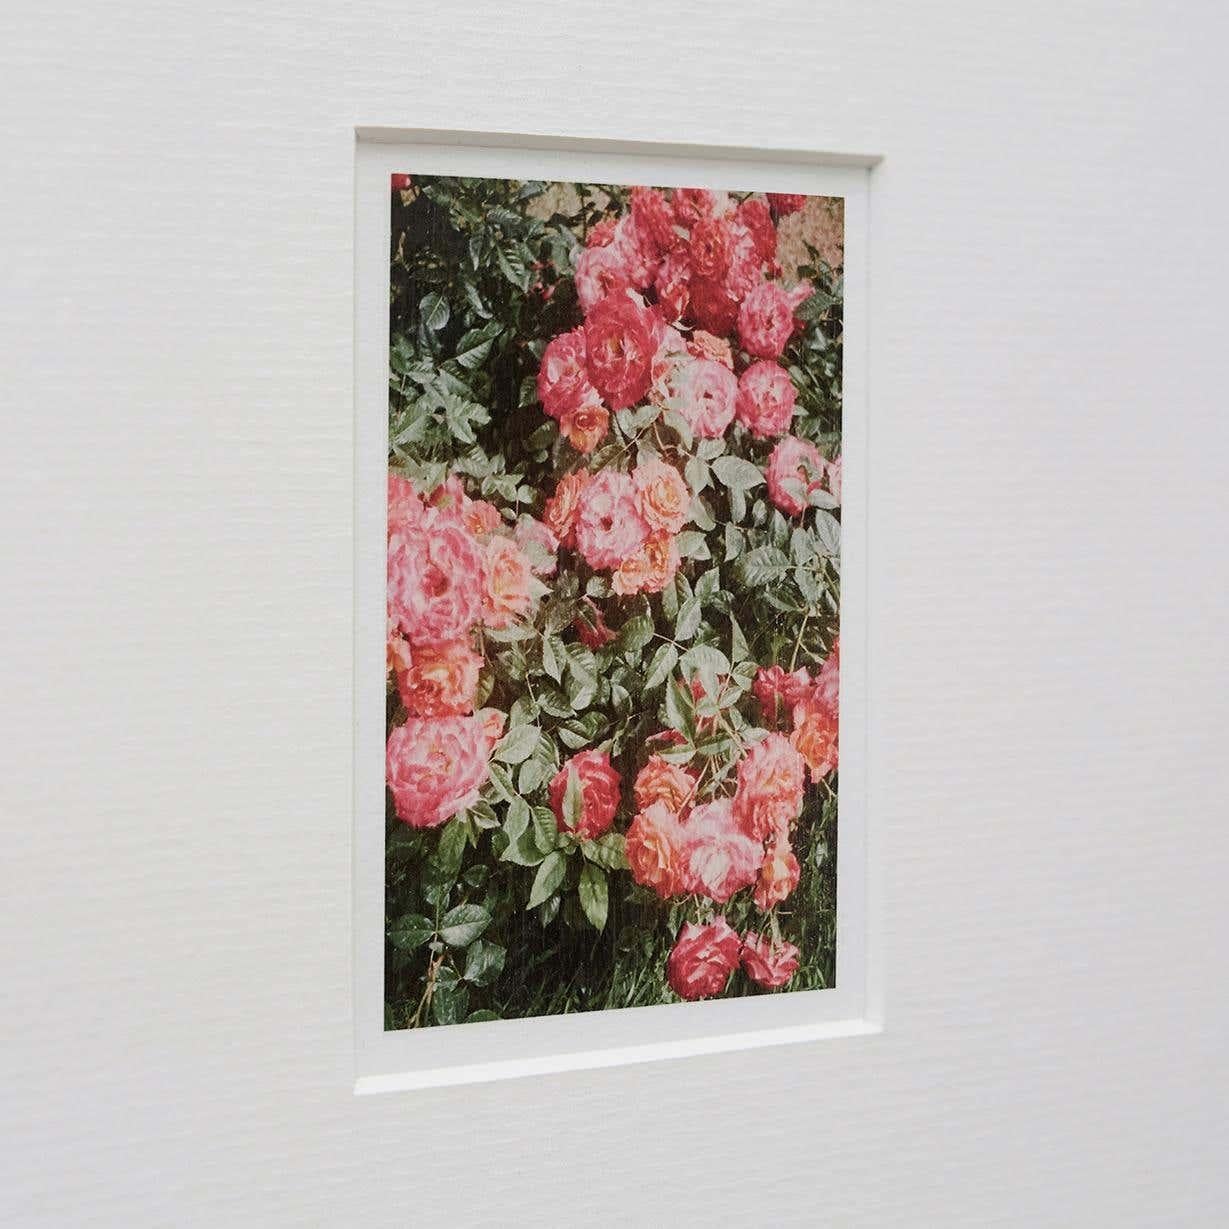 David Urbano Contemporary Photography the Rose Garden Nº 47 For Sale 1